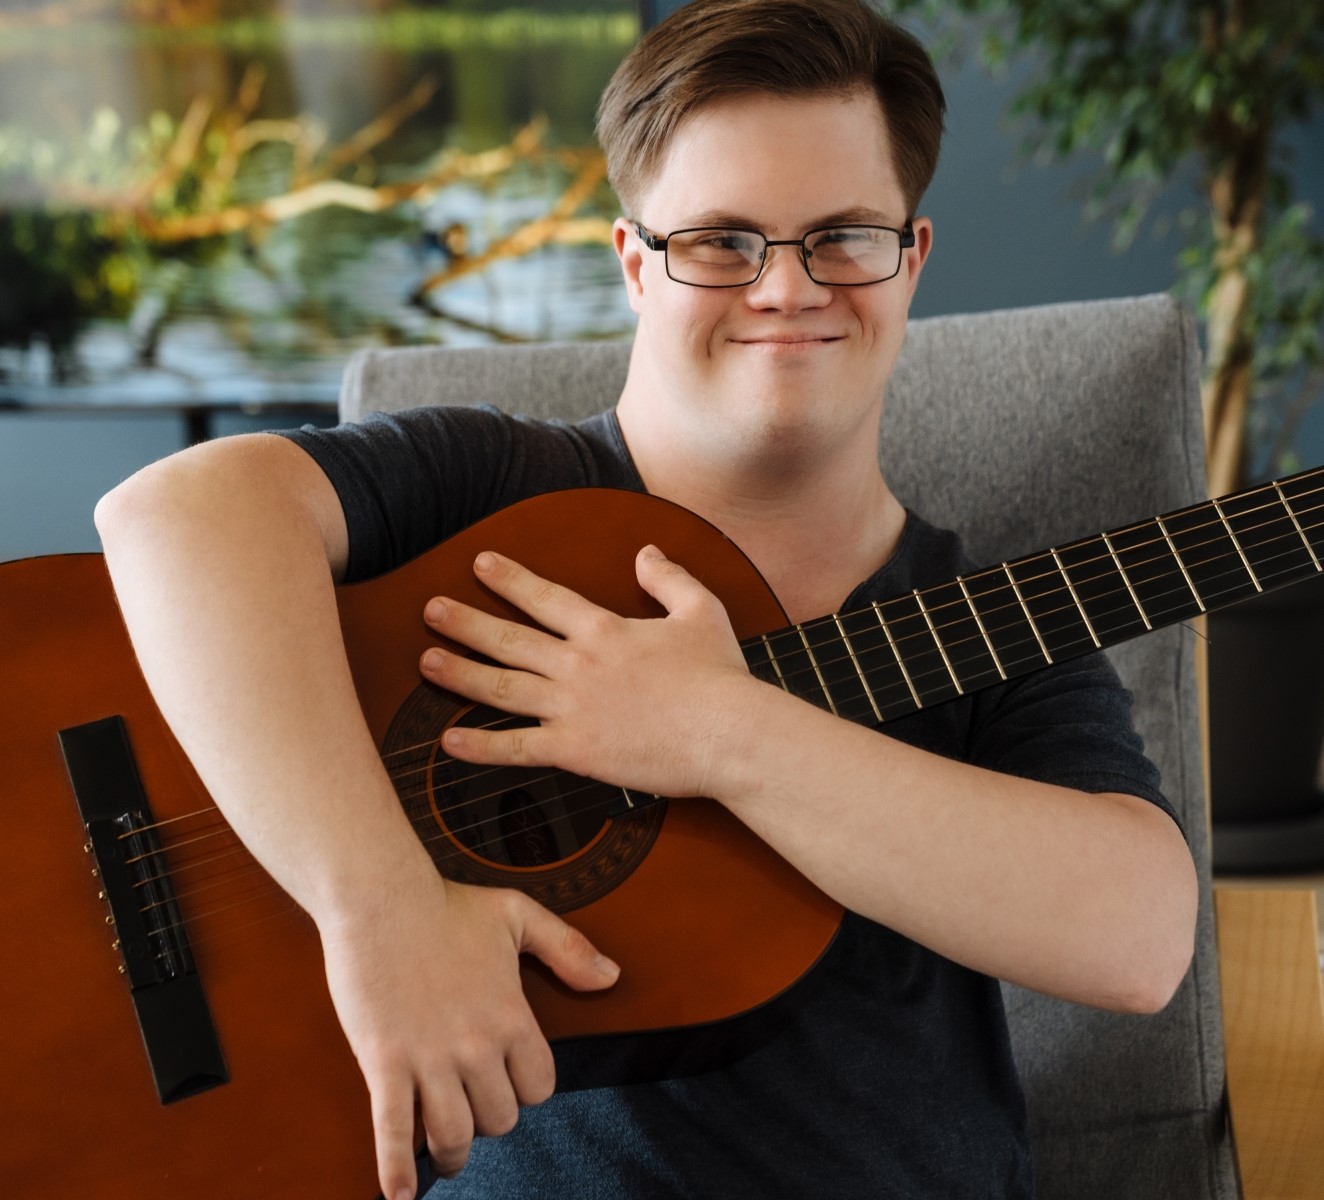 Ung man med Downs syndrom sitter med en gitarr i famnen